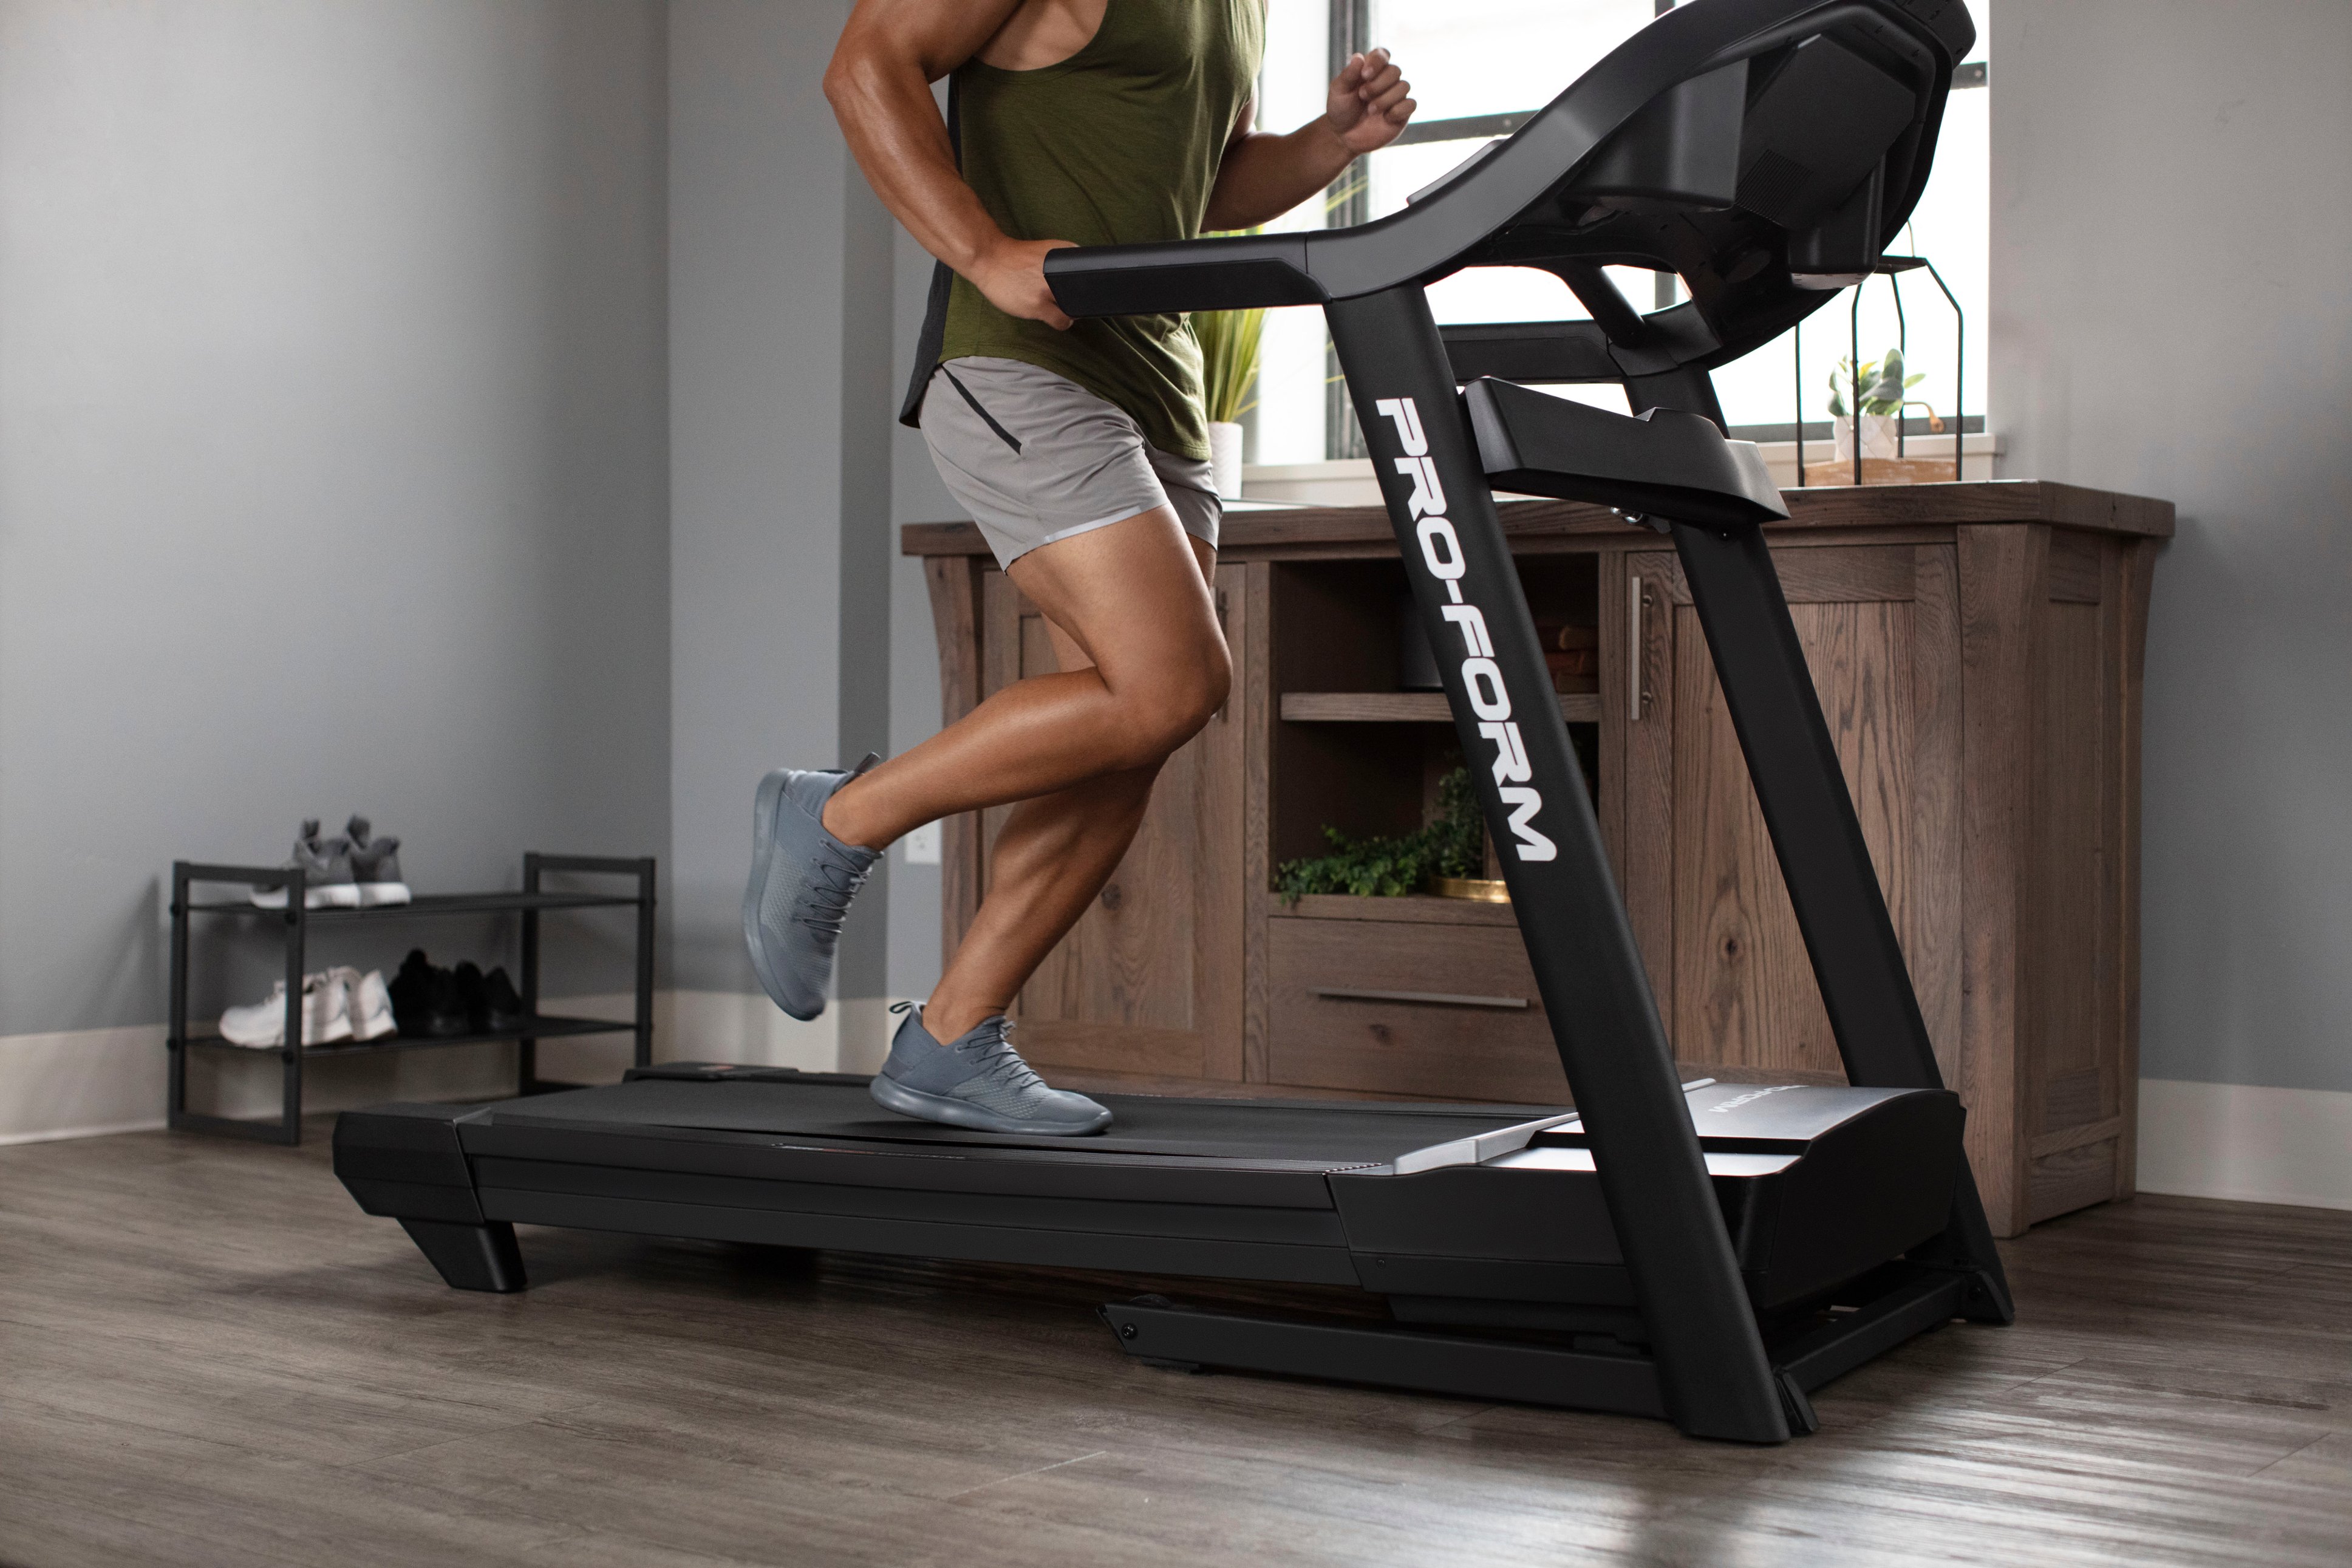 Bevestigen aan salto vloeiend Best Buy: ProForm Sport 7.0 Treadmill Black PFTL50919